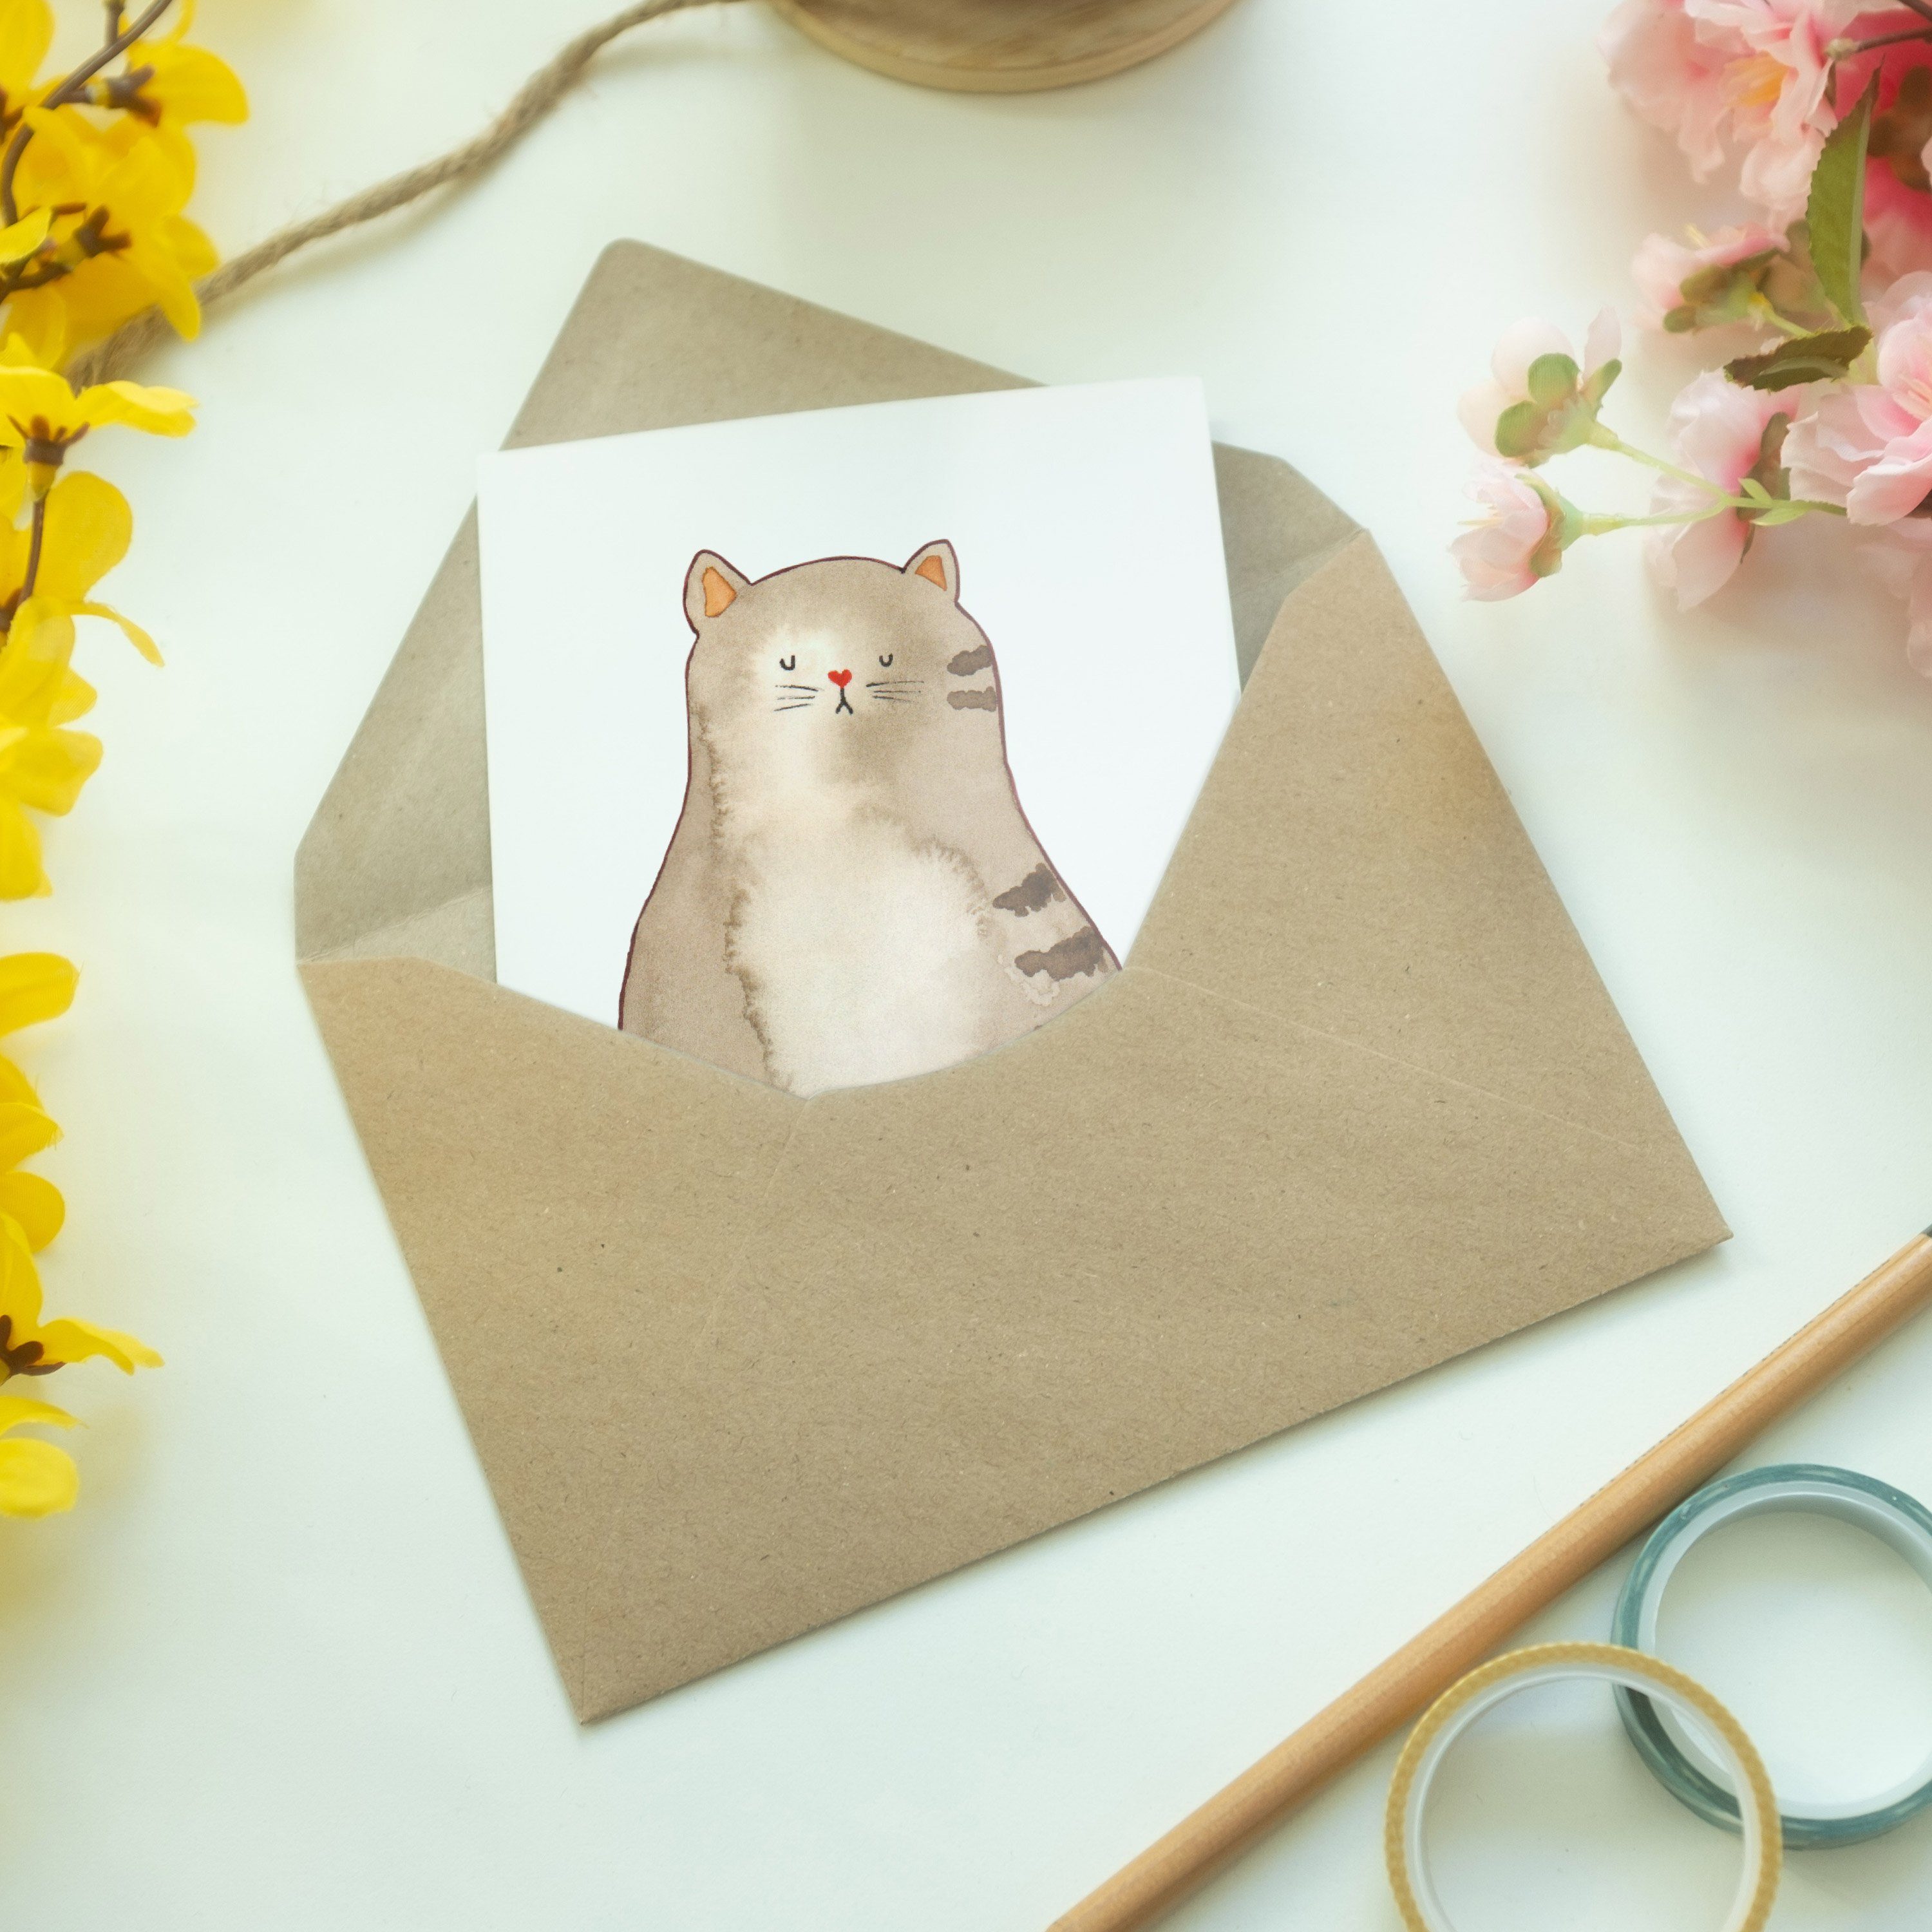 Mr. & Mrs. Panda Grußkarte - Katzendeko, Hochzeitskarte, Geschenk, - Katze K sitzend Weiß Karte